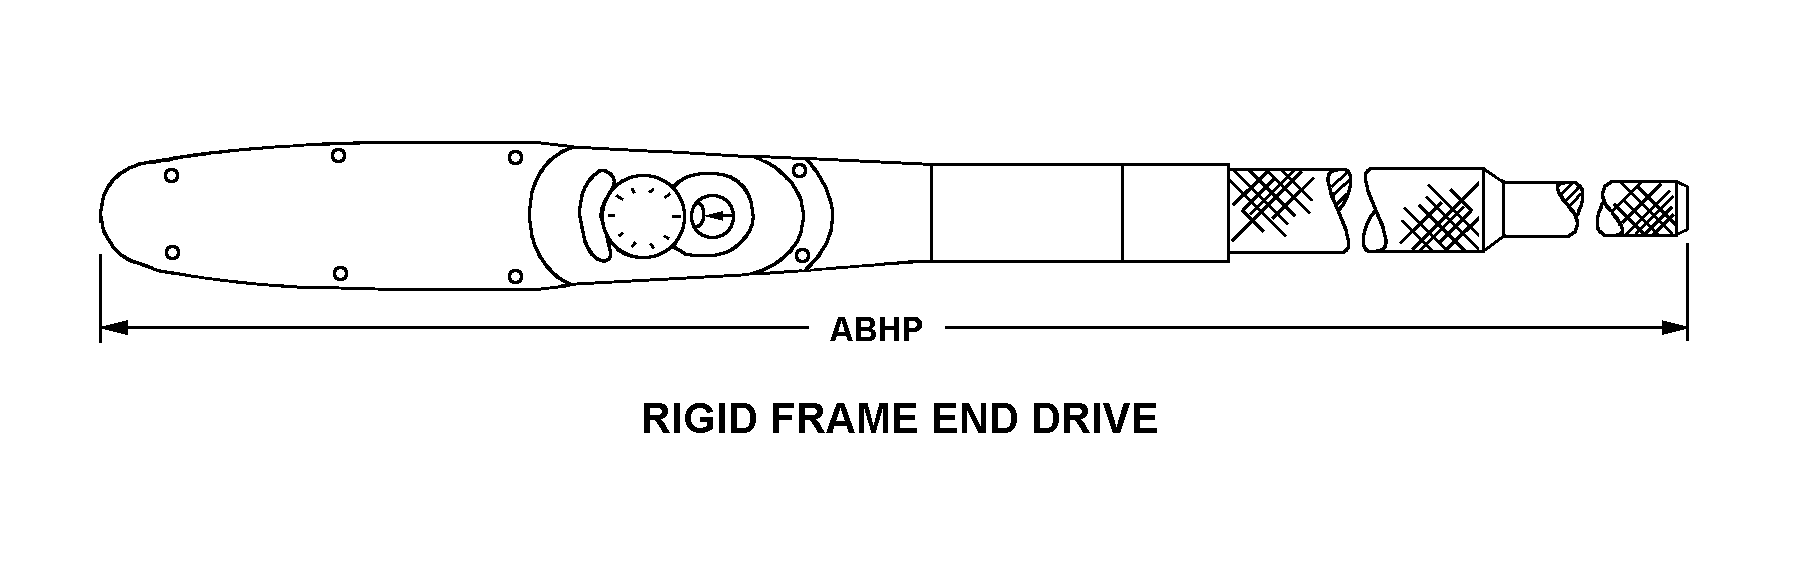 RIGID FRAME END DRIVE style nsn 5120-01-062-1163